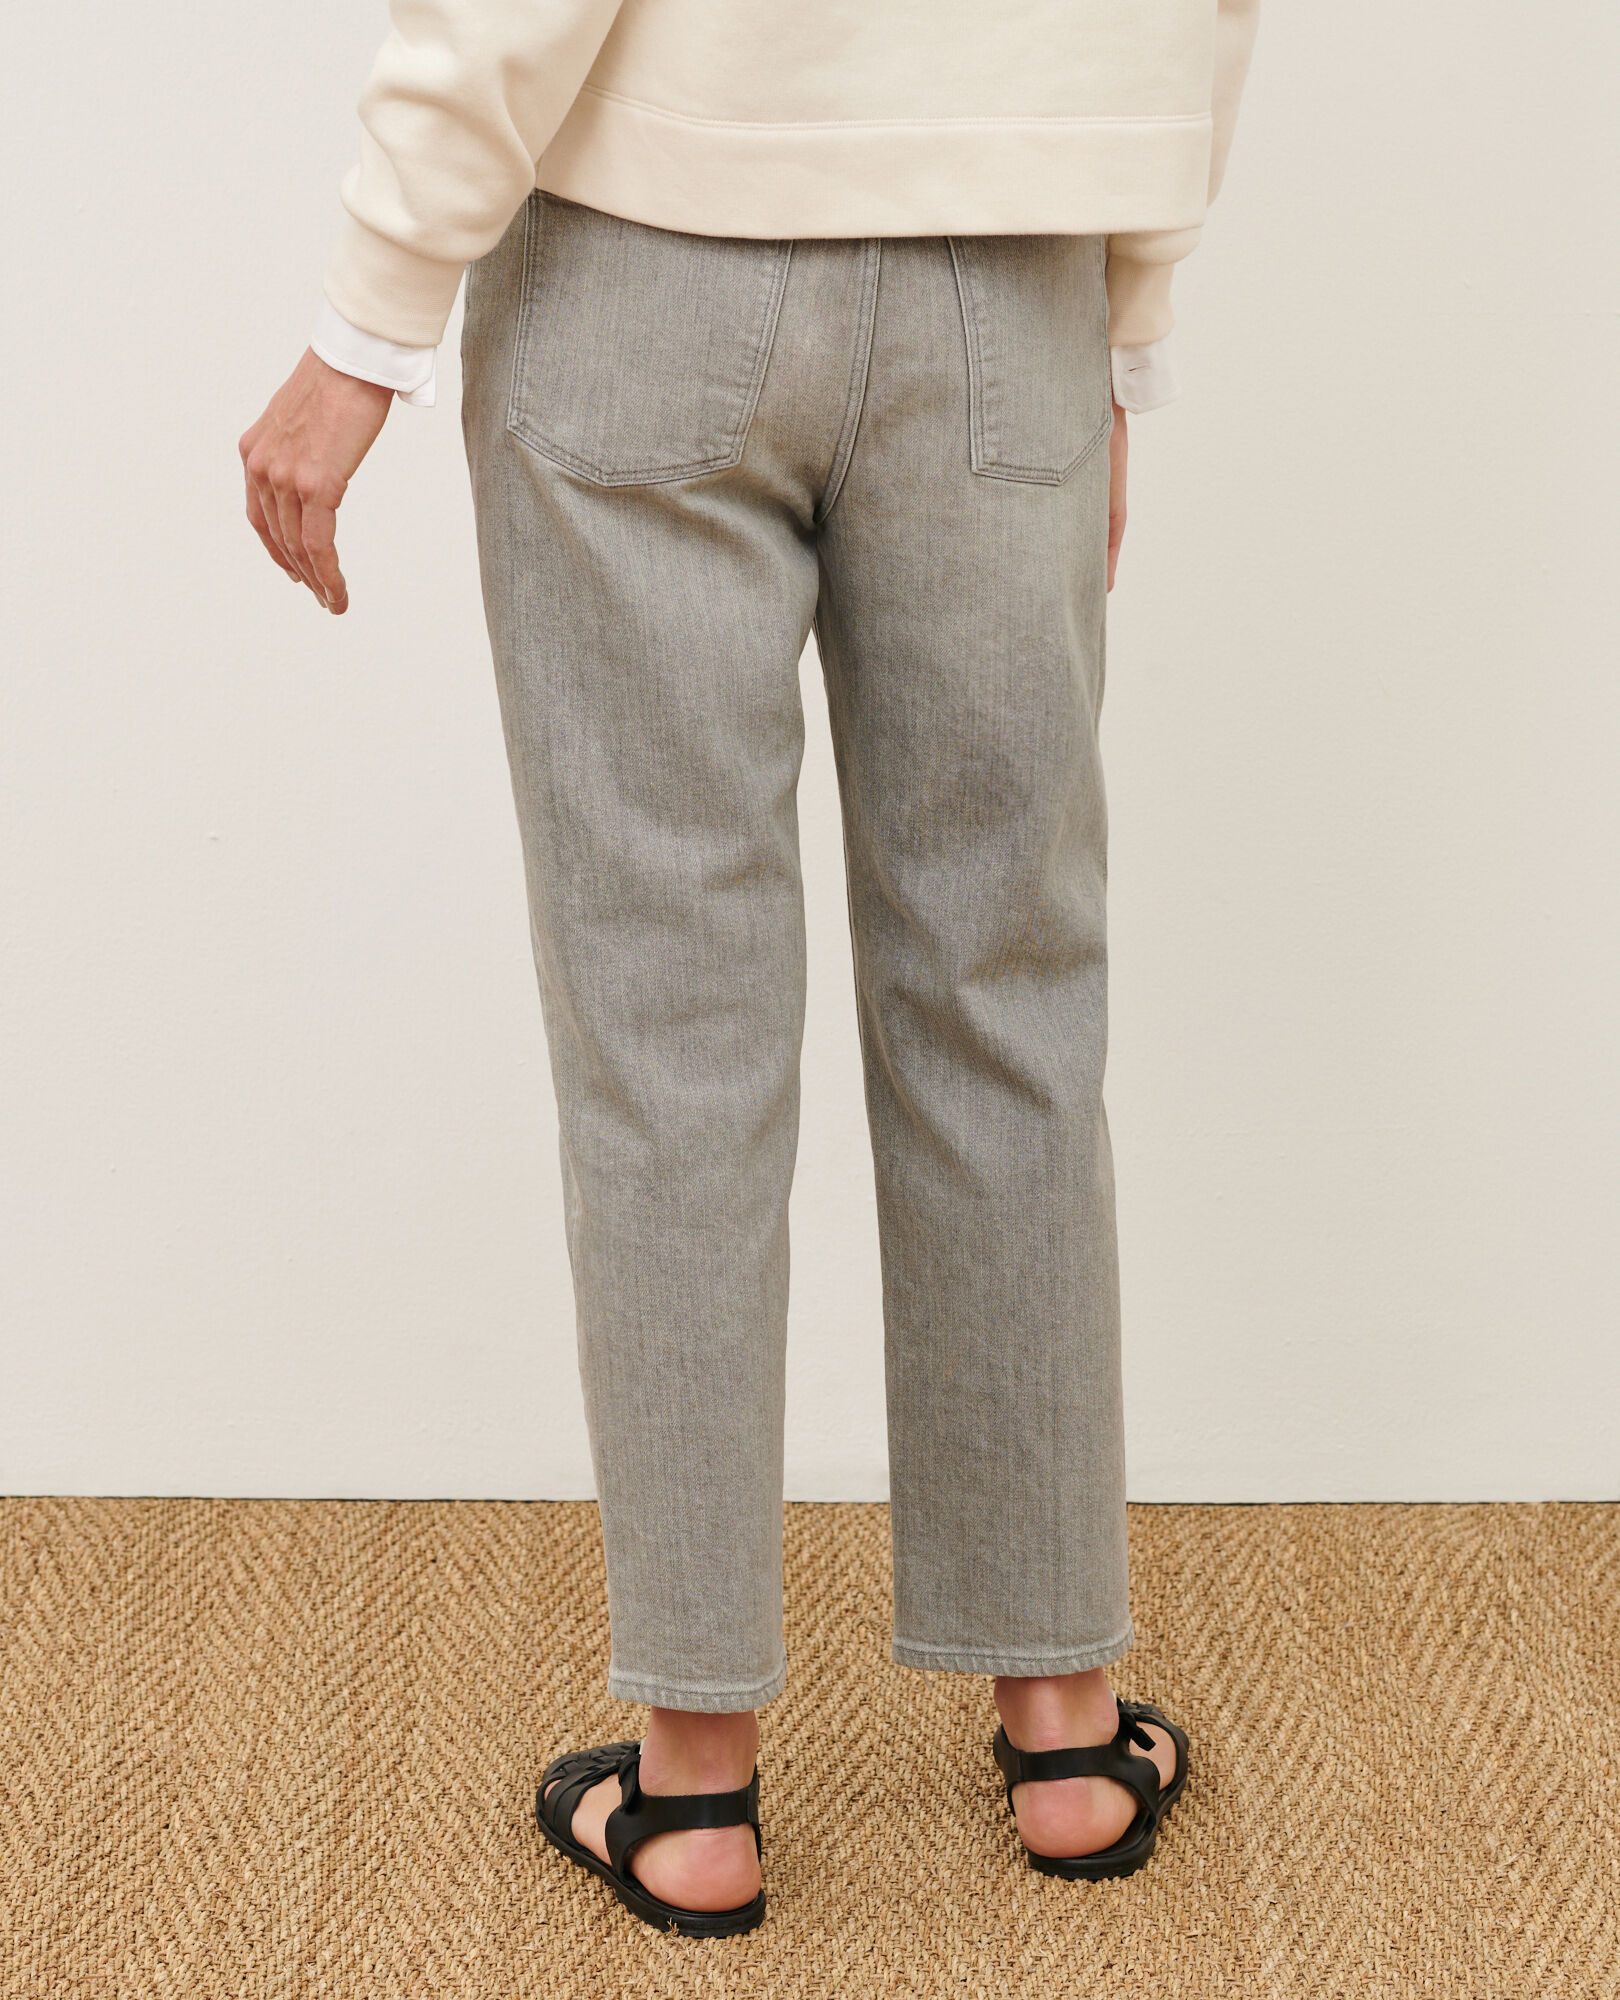 RITA - SLOUCHY - Loose cotton jeans 110 denim grey 2spe394